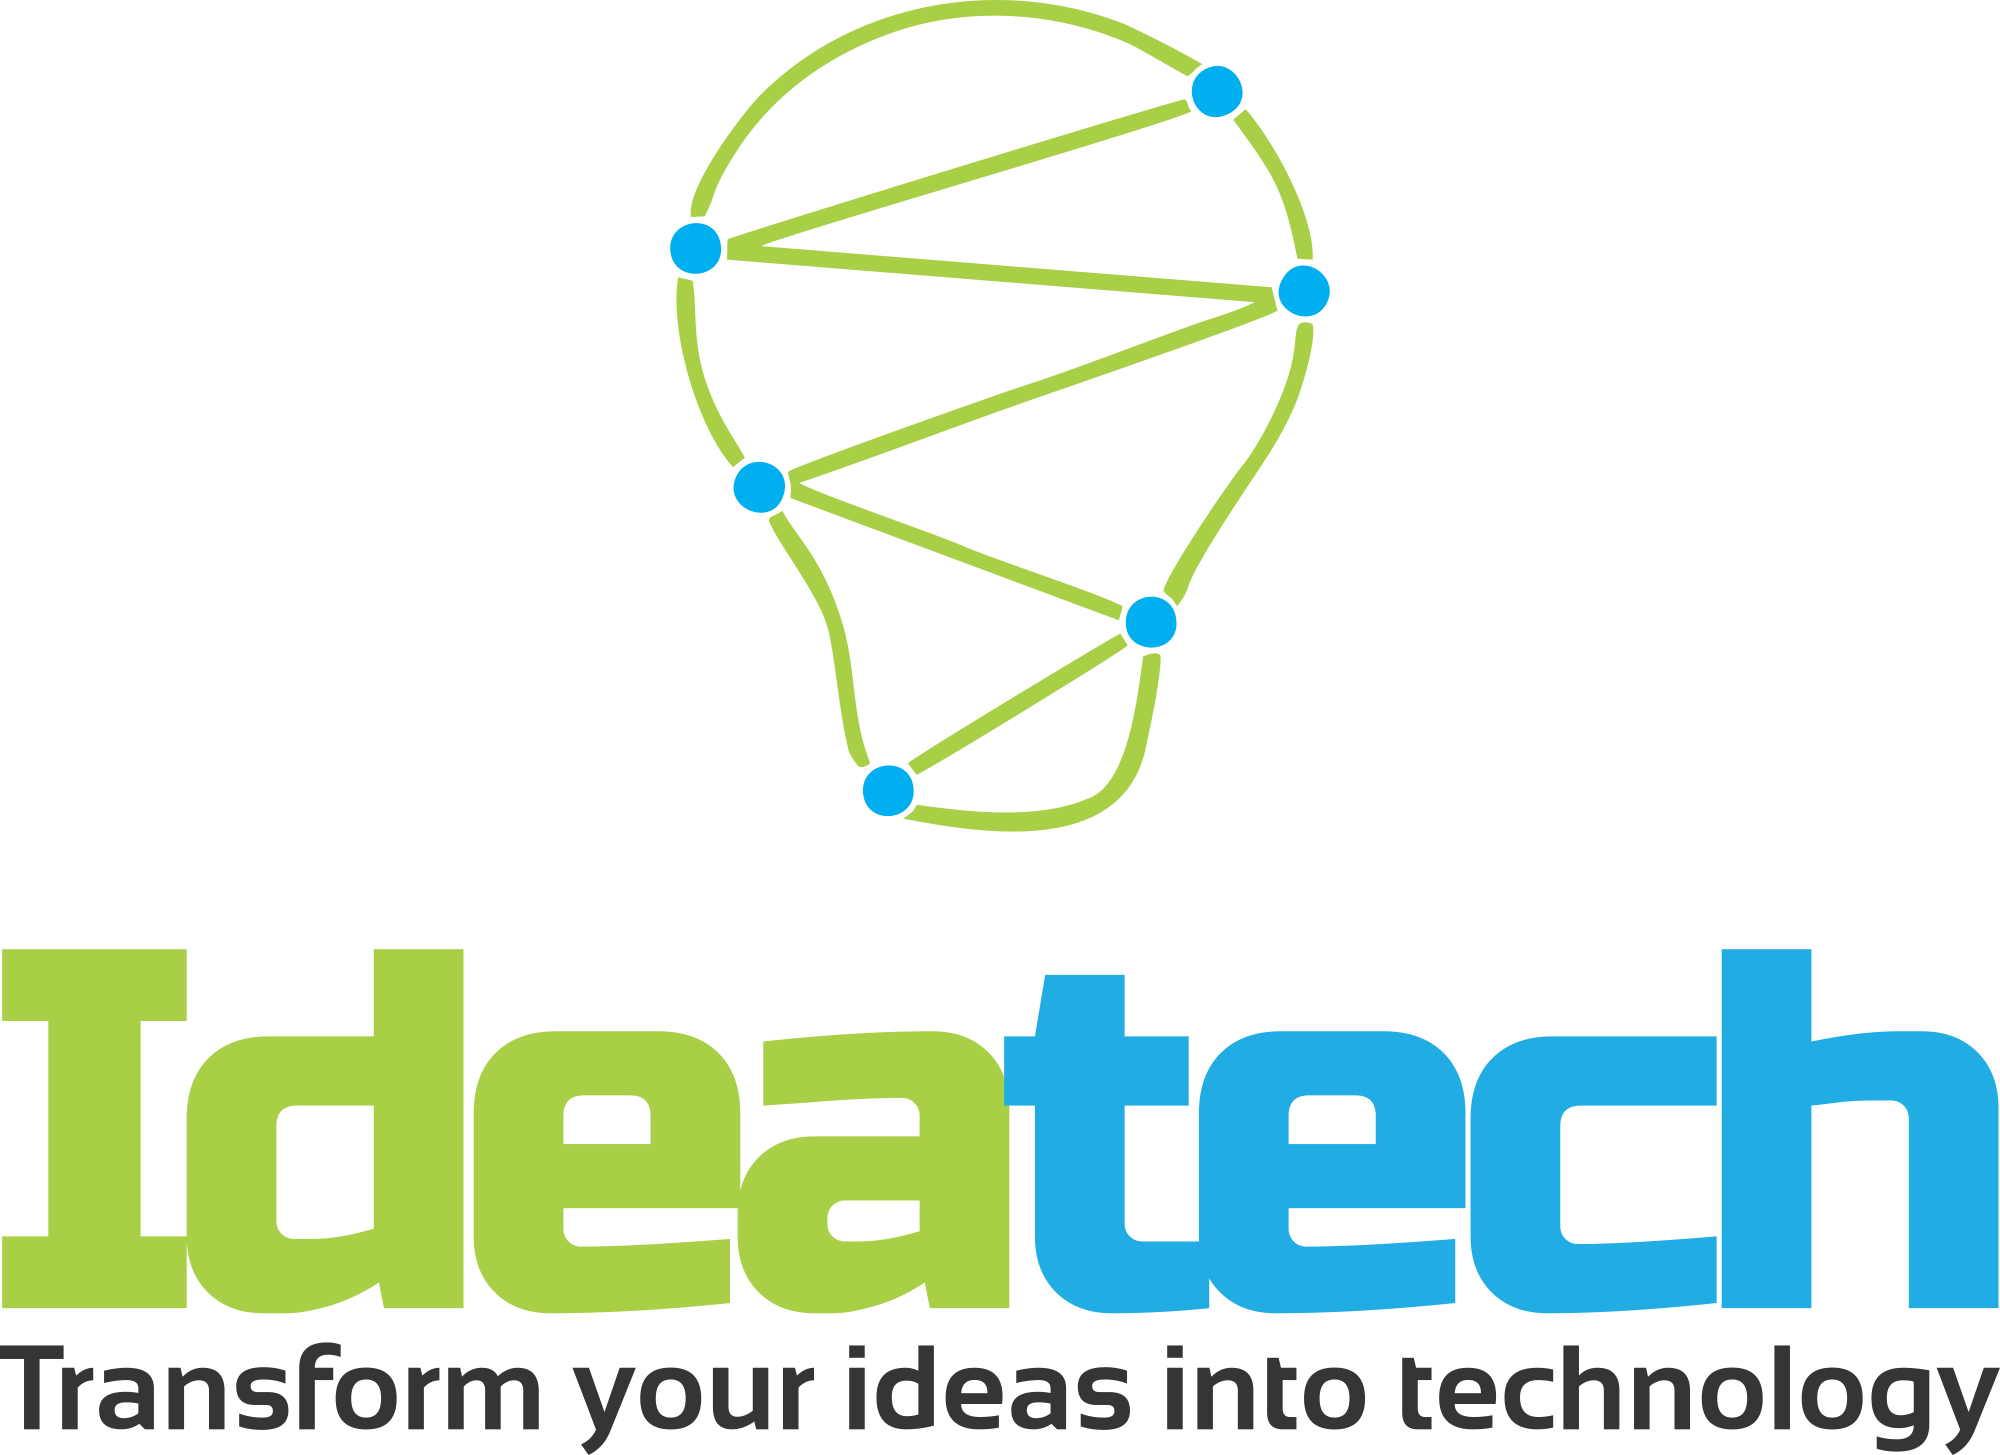 itsh - ideatech logo